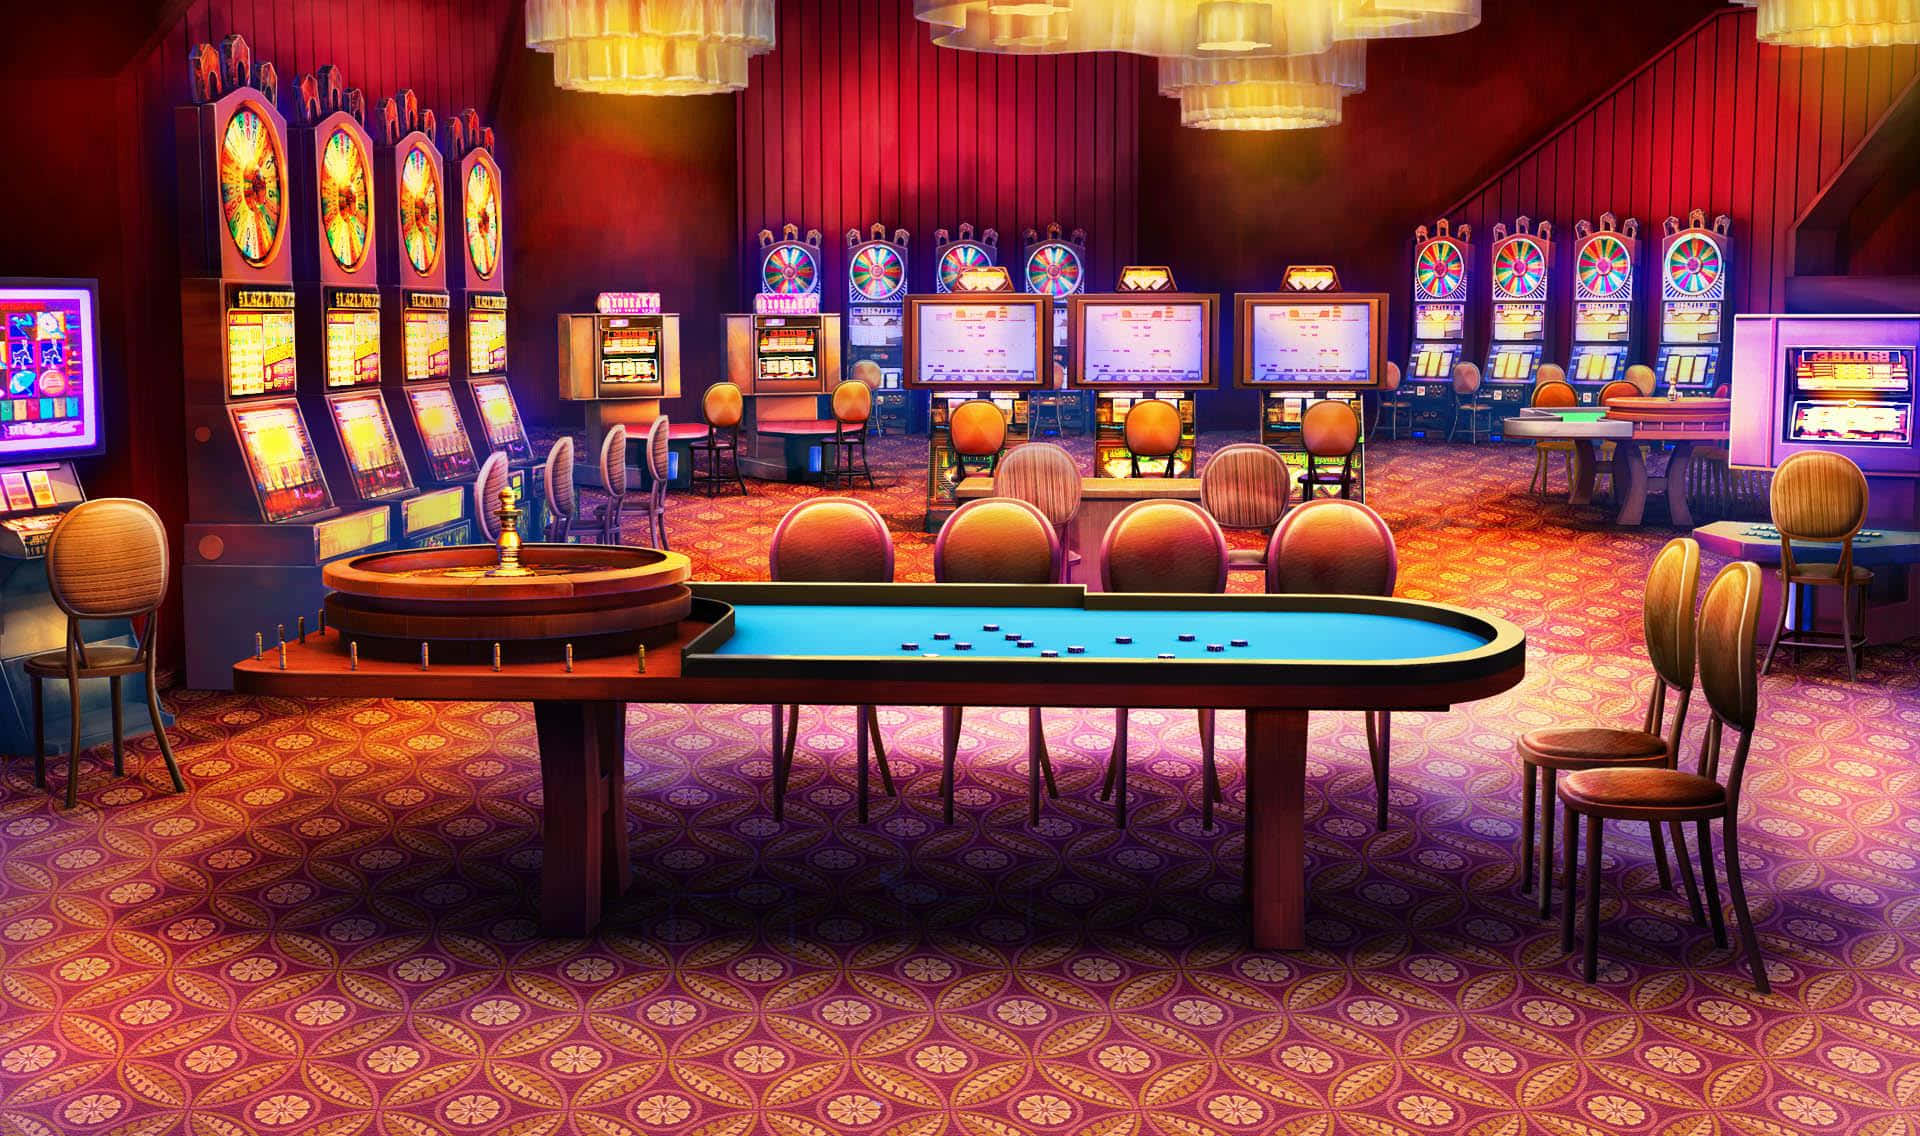 Casino Background Images  Free Download on Freepik